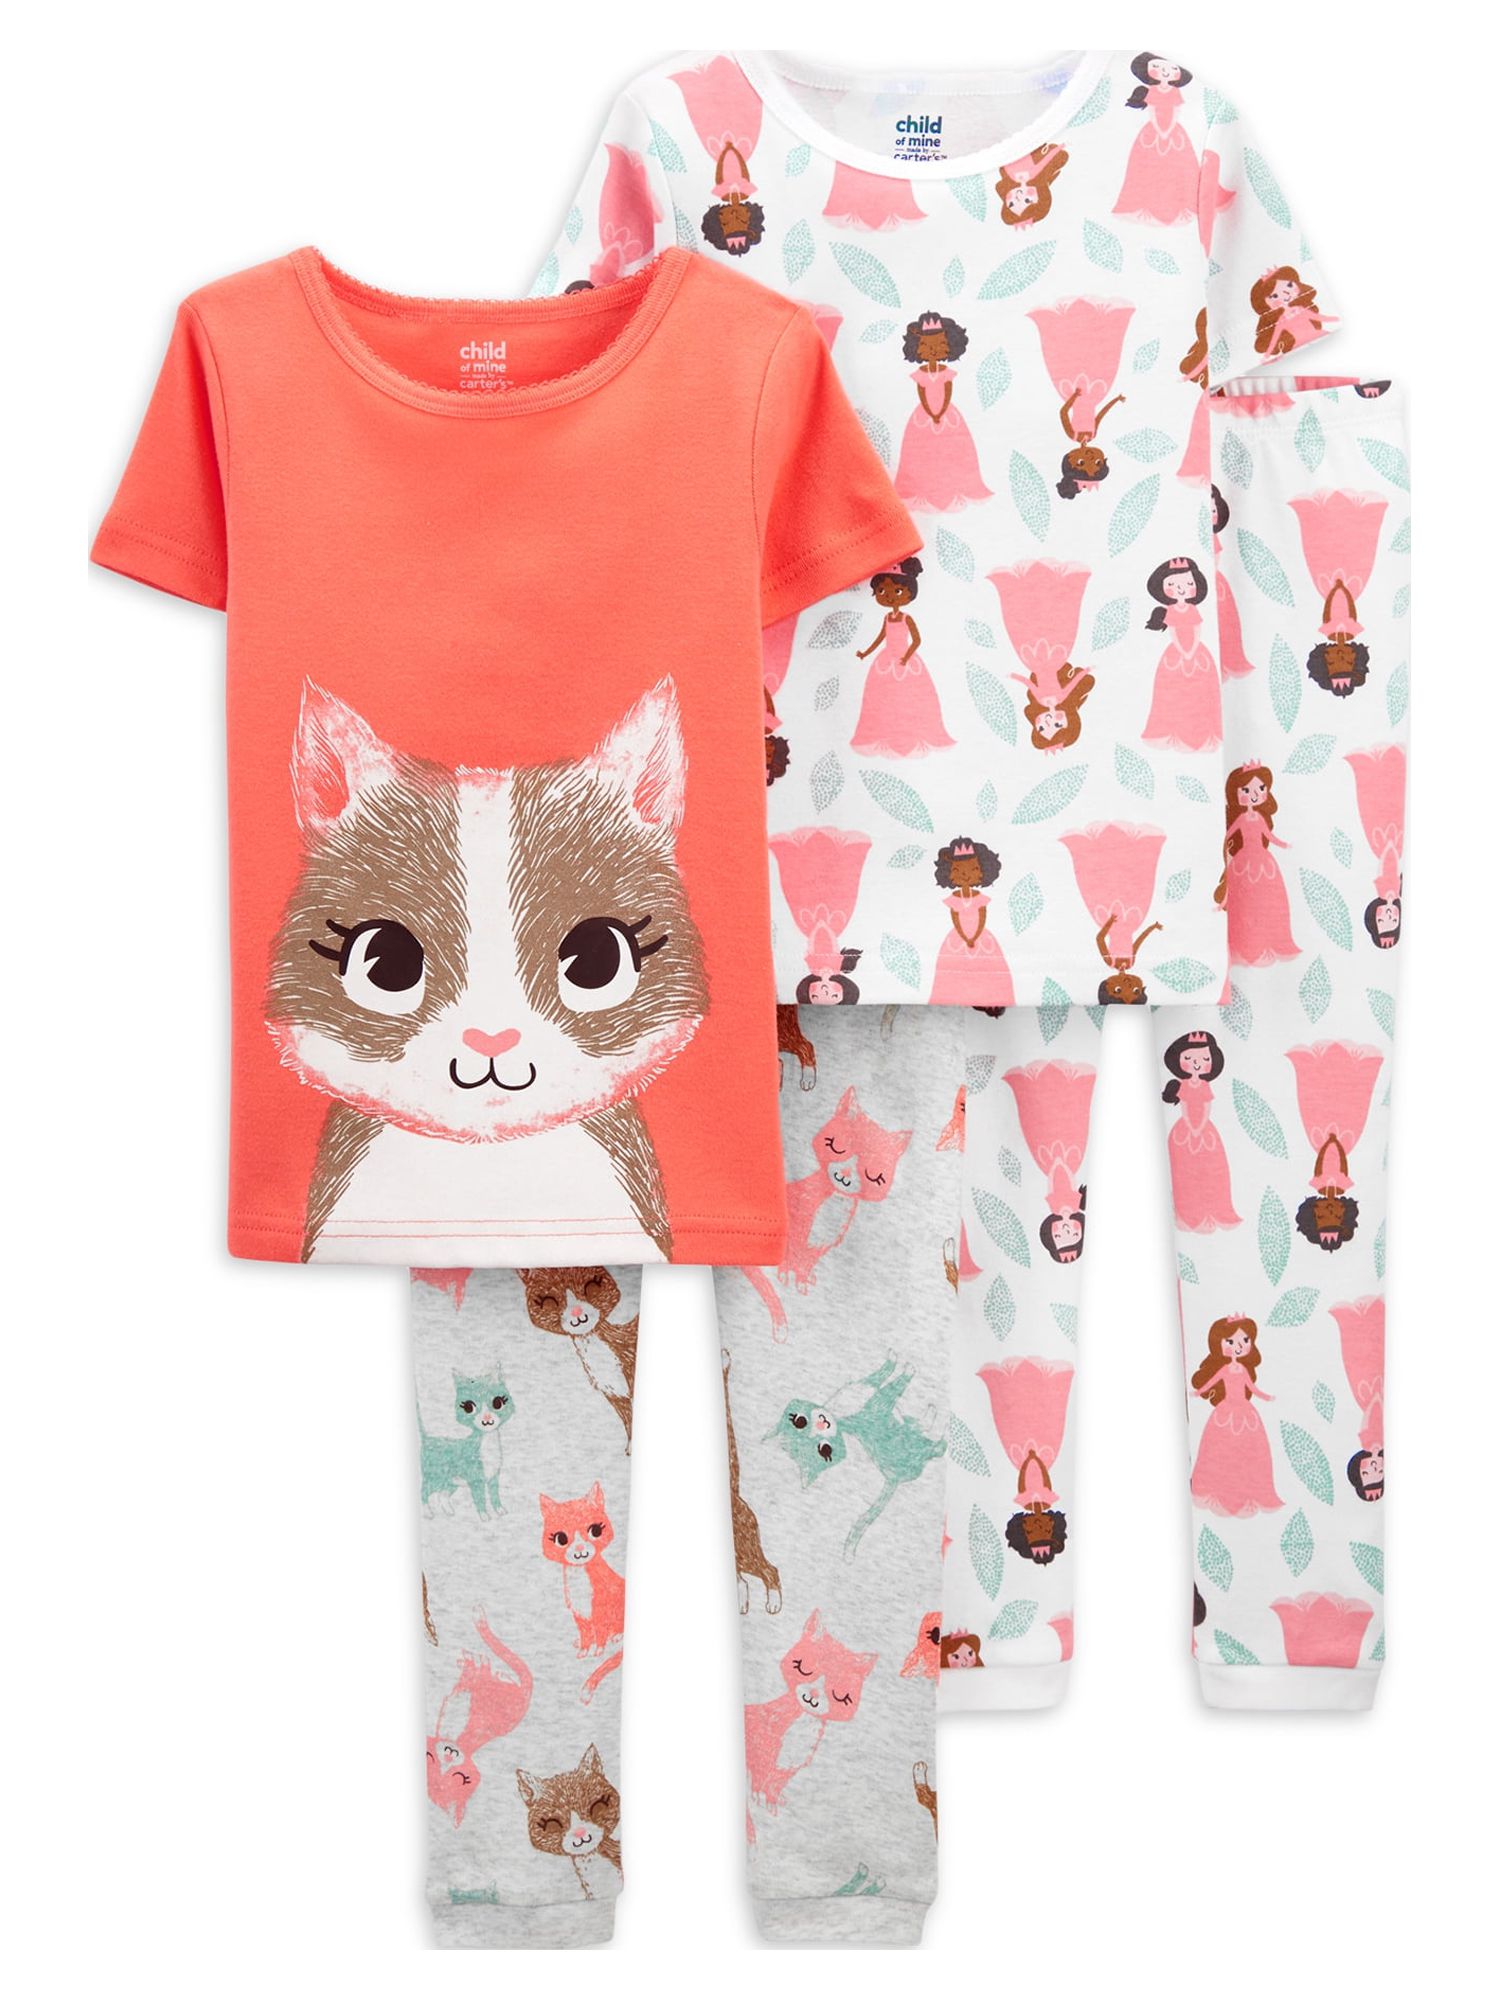 Carter's Child of Mine Baby Girls & Toddler Girls Snug Fit Cotton Short Sleeve Pajamas 4pc Set (12M-5T) - image 1 of 3